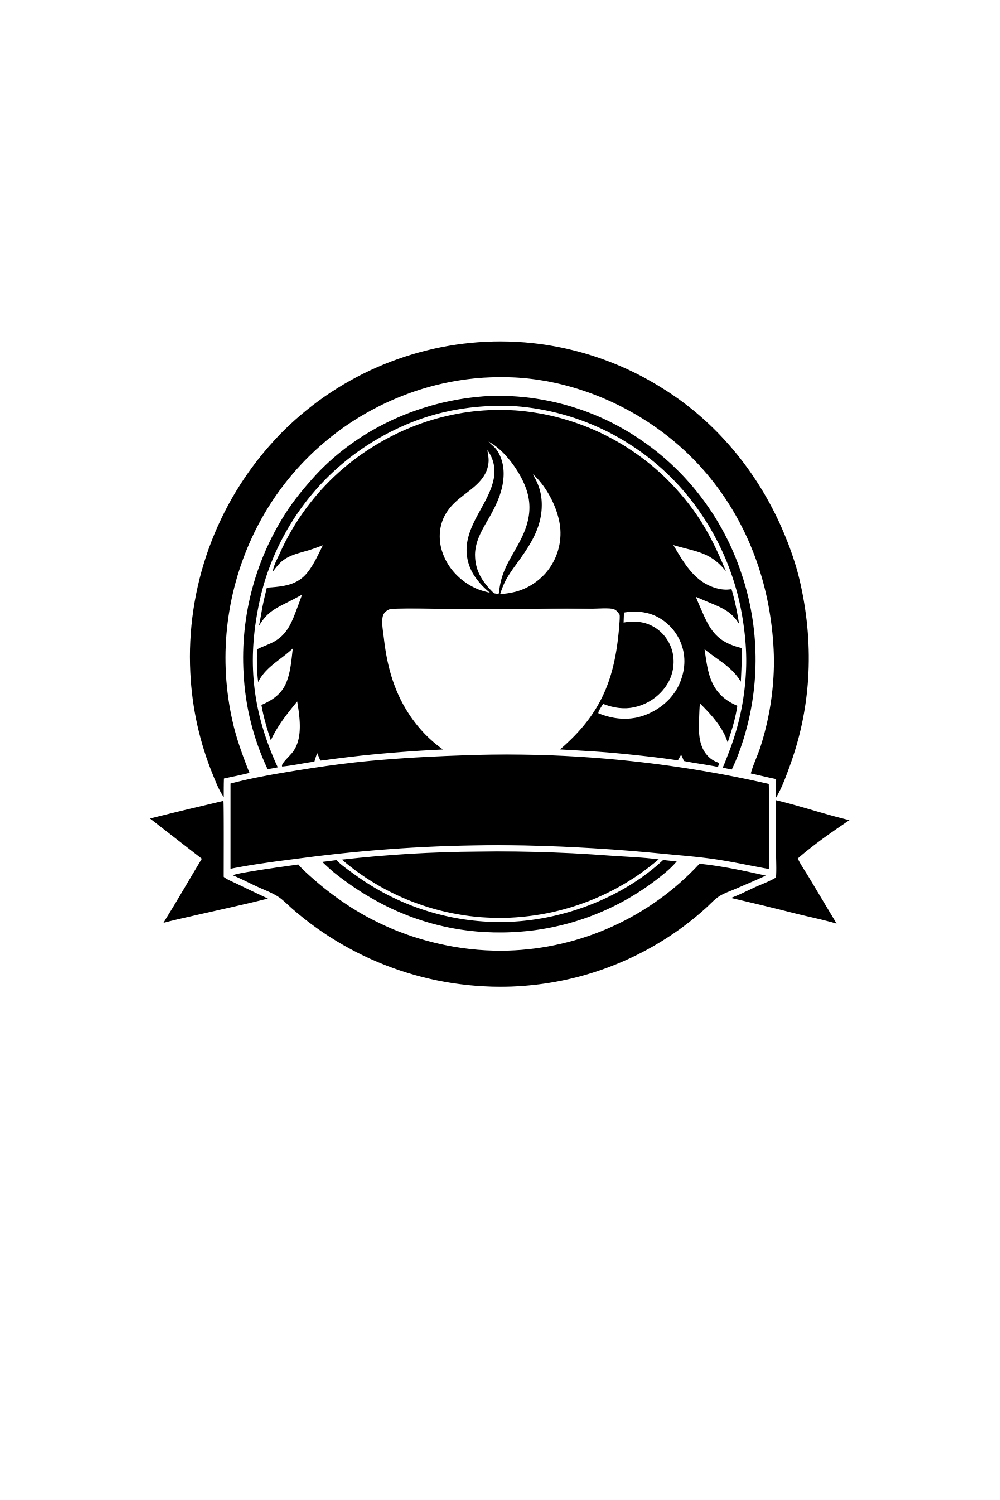 LOGO for Coffee Shop Illustration logo Editable pinterest preview image.